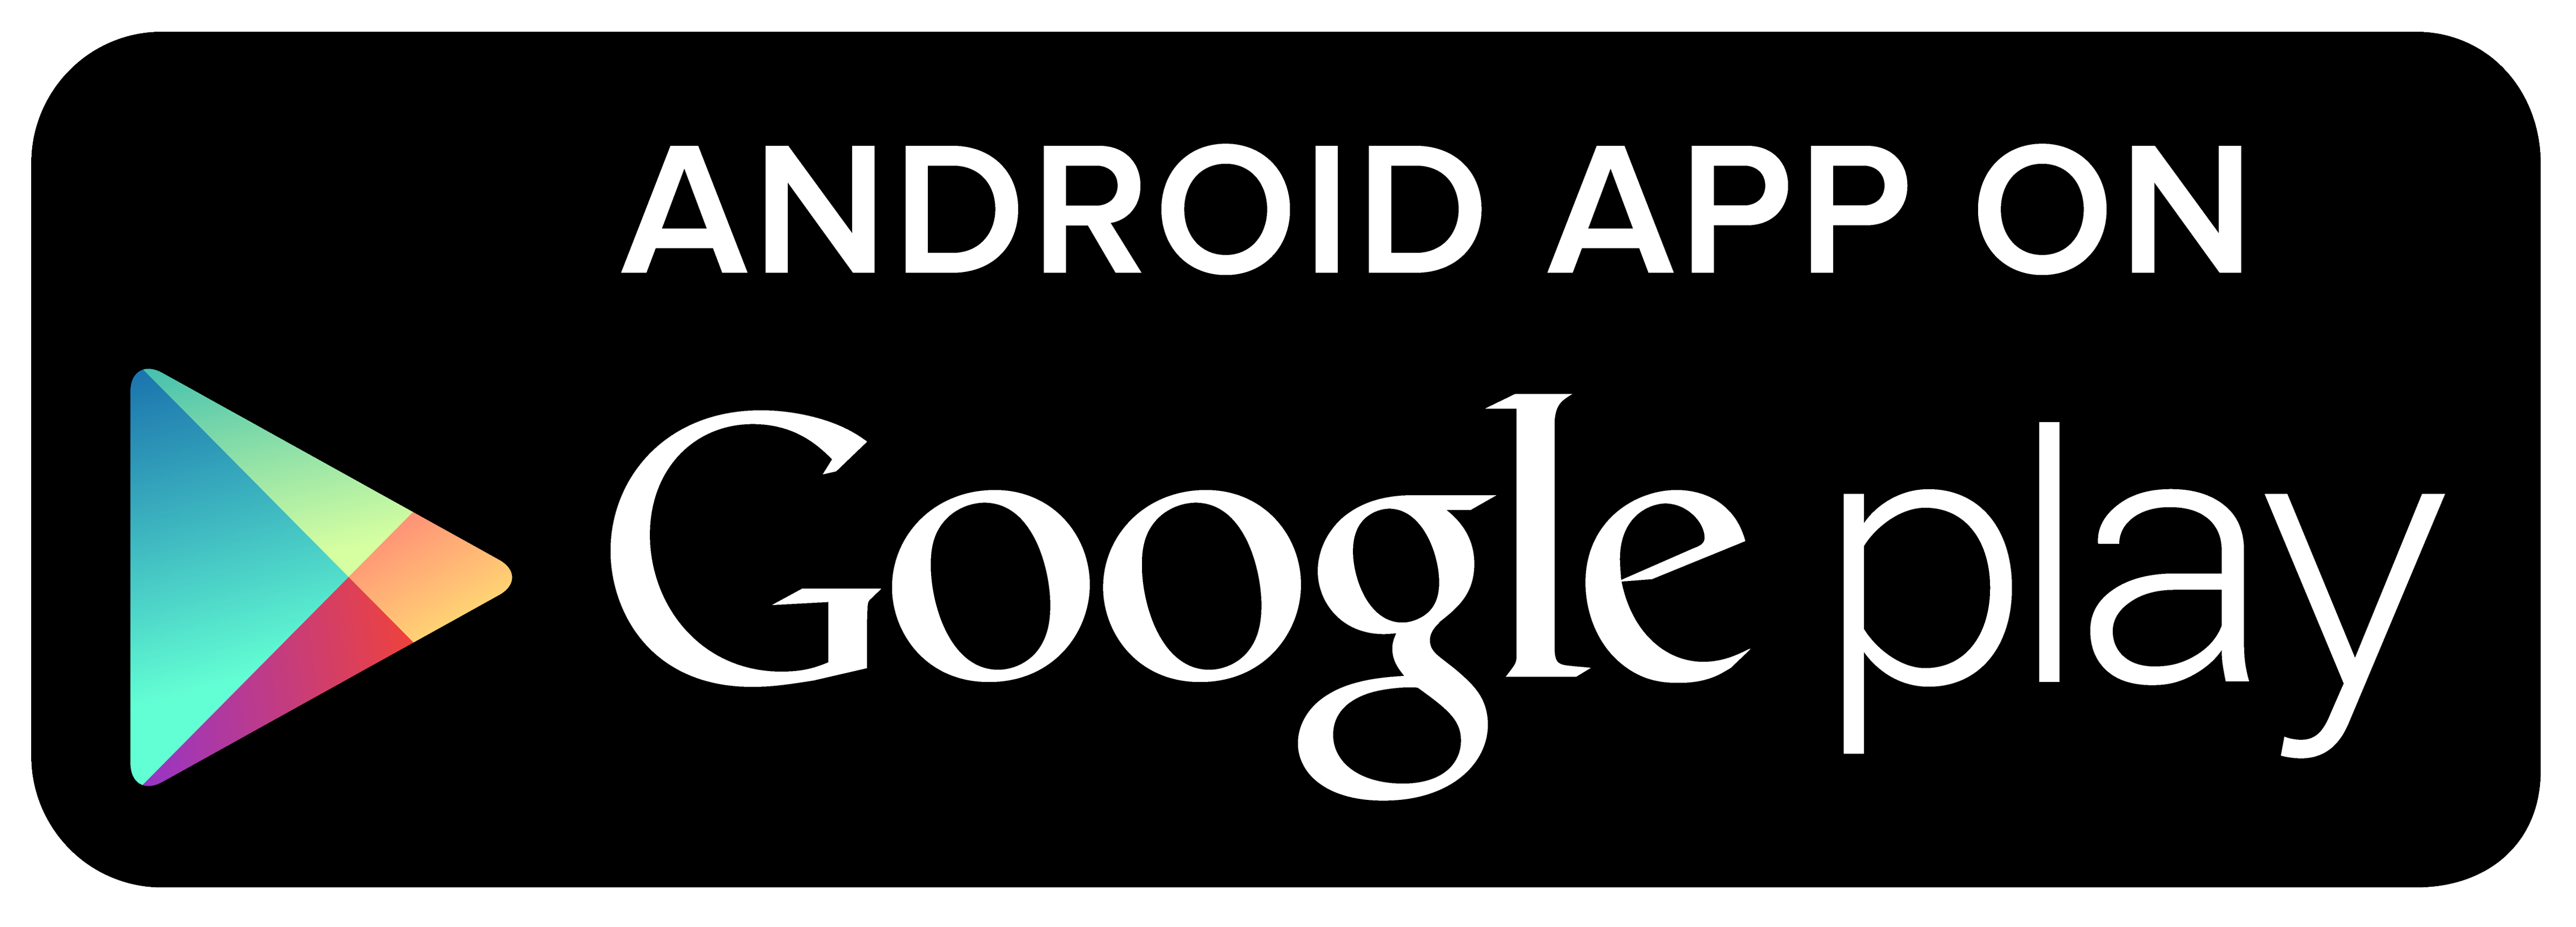 Google play d. App Store Google Play. Логотип гугл плей. Иконка app Store и Google Play. Иконки эпстор и гуглплей.